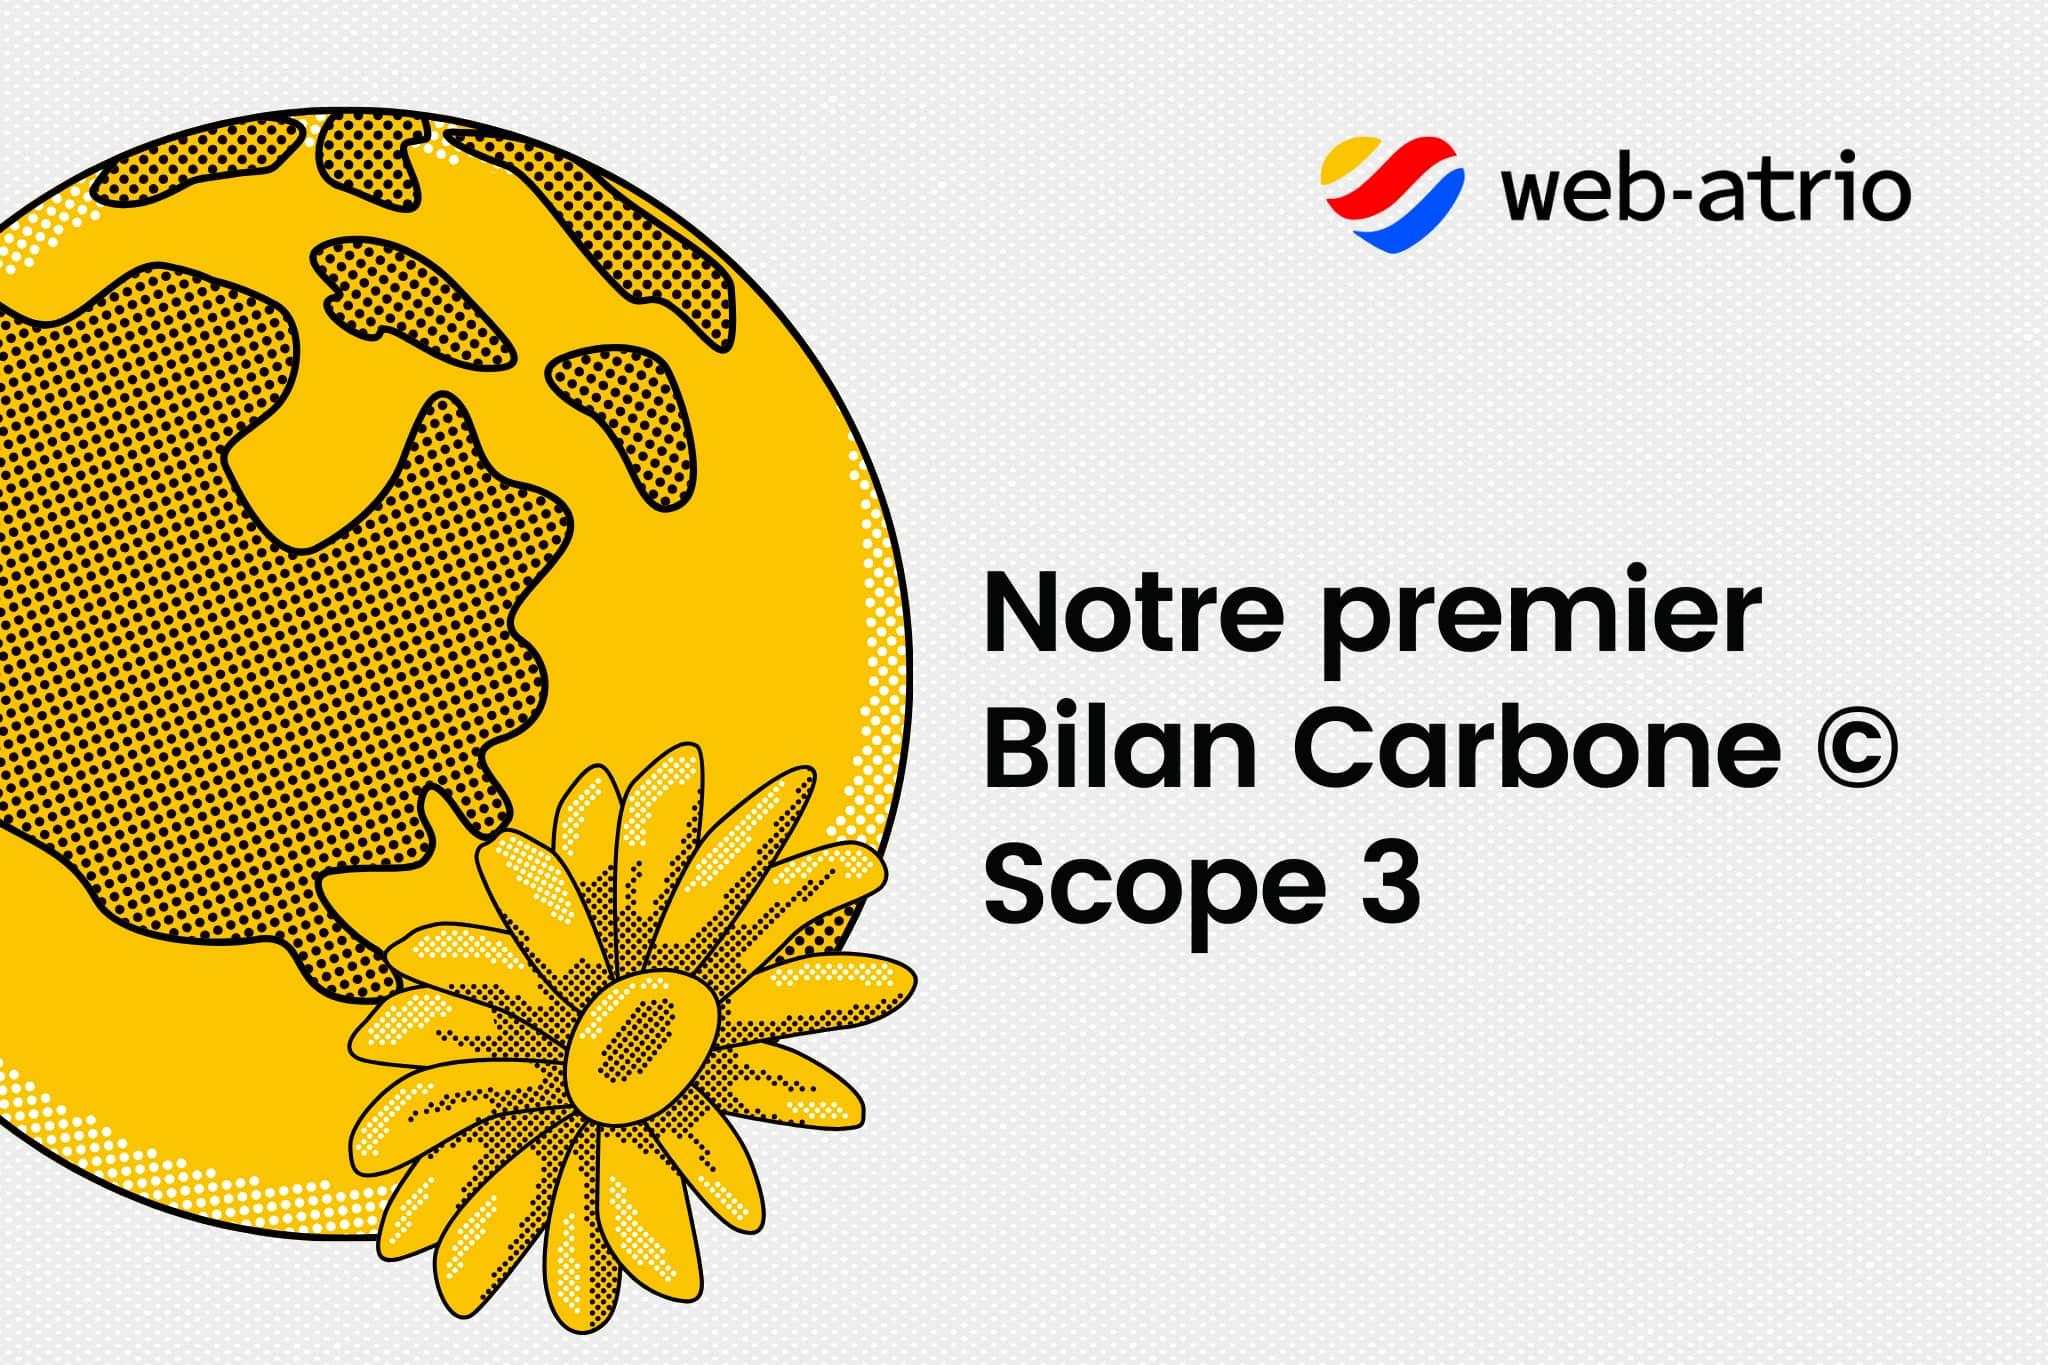 Notre premier bilan carbone Scope 3